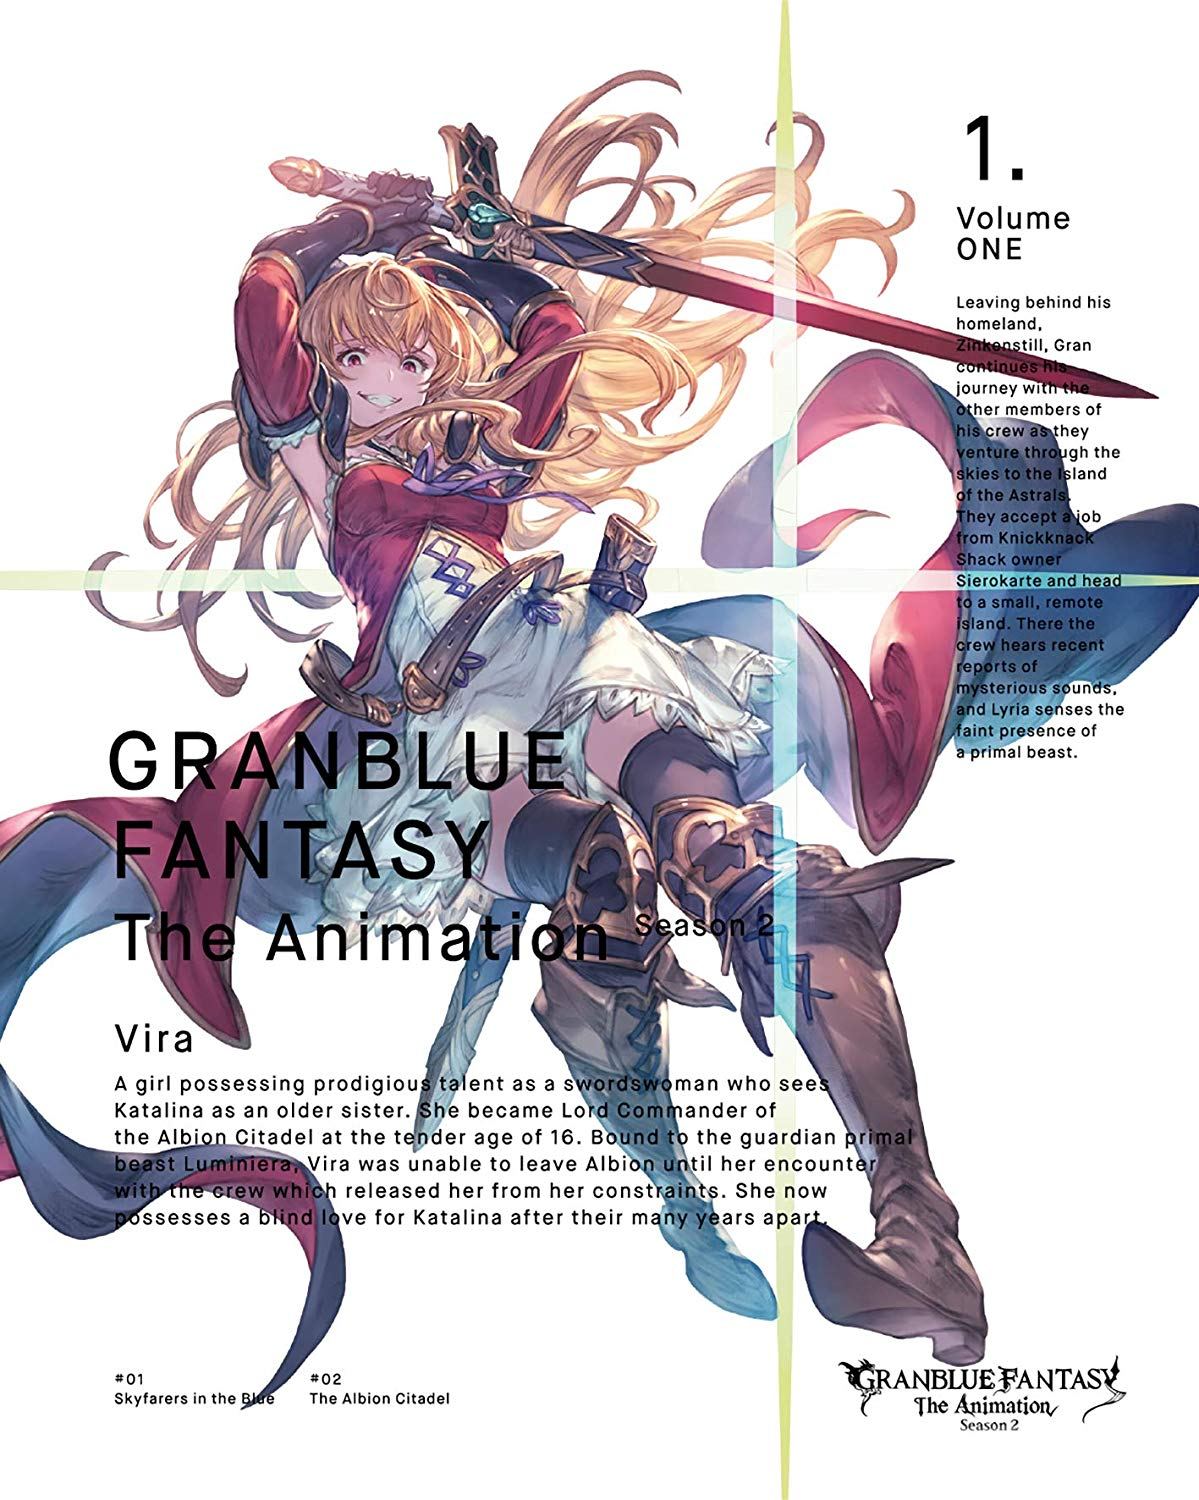 Granblue Fantasy: The Anime: Season 2 Episode 5: The Review